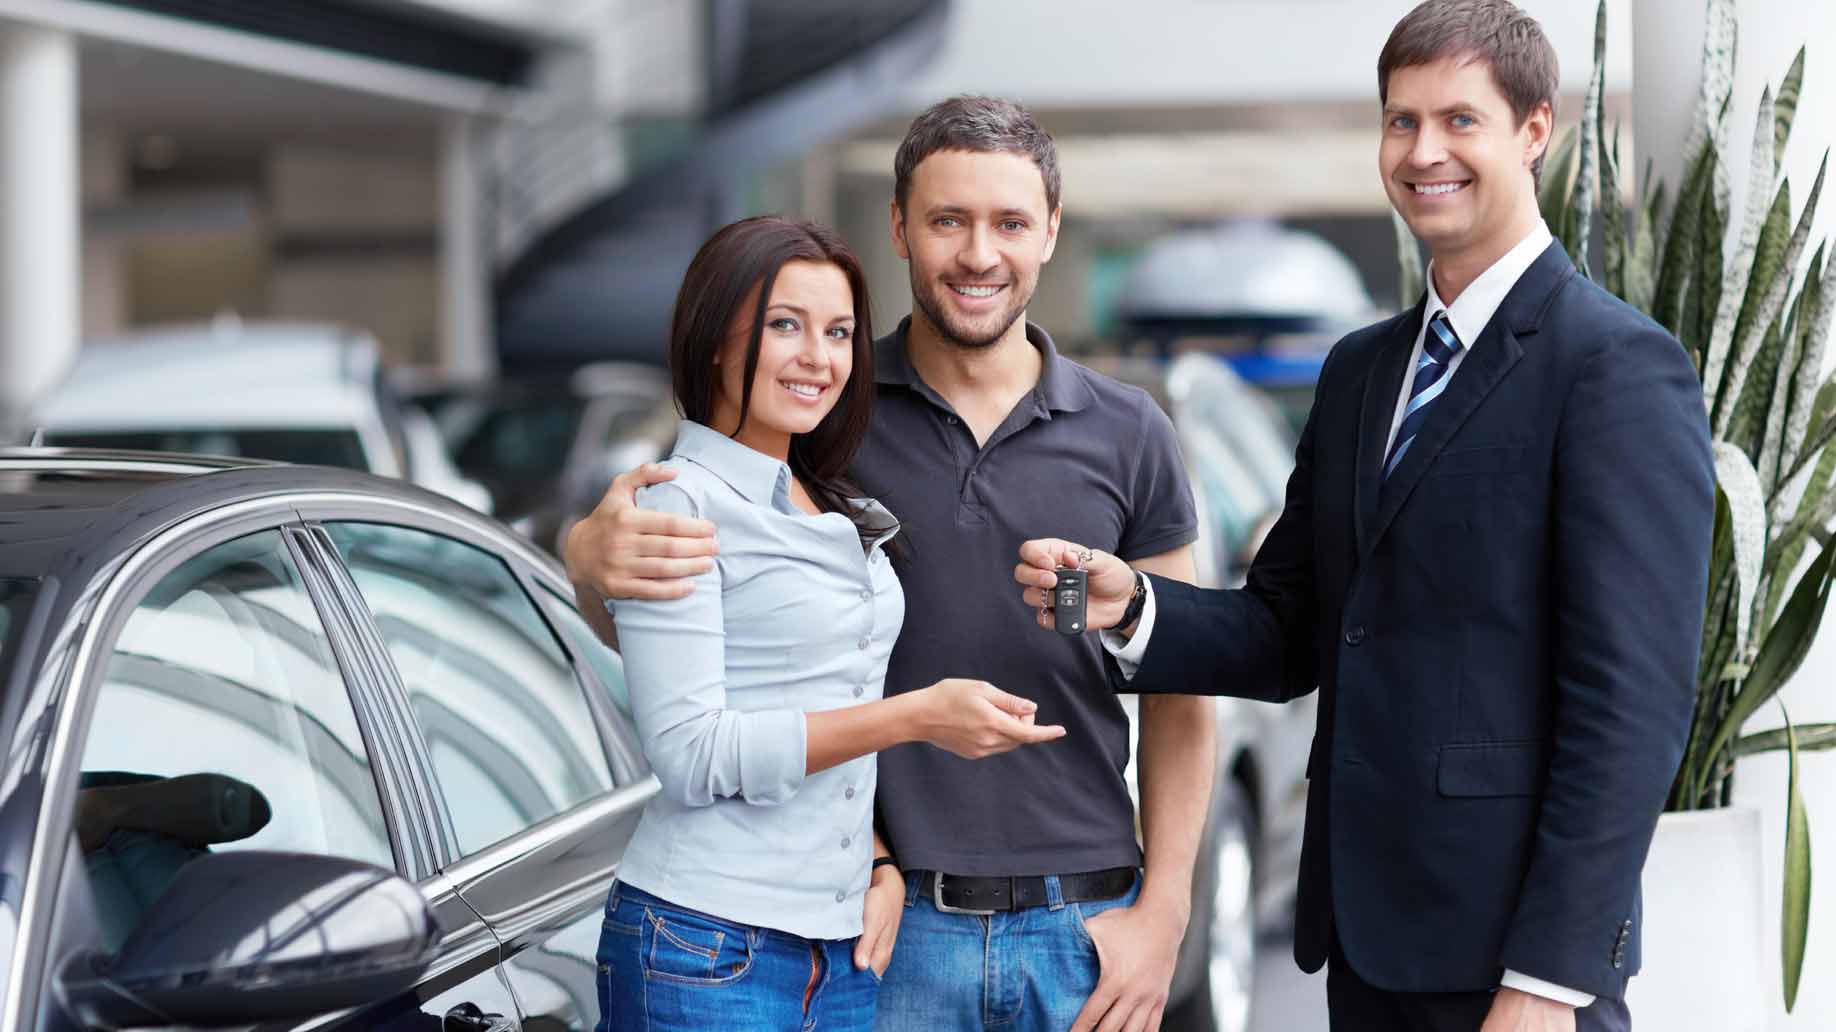 Obtain No Deposit Car Finance in 2 Easy Steps